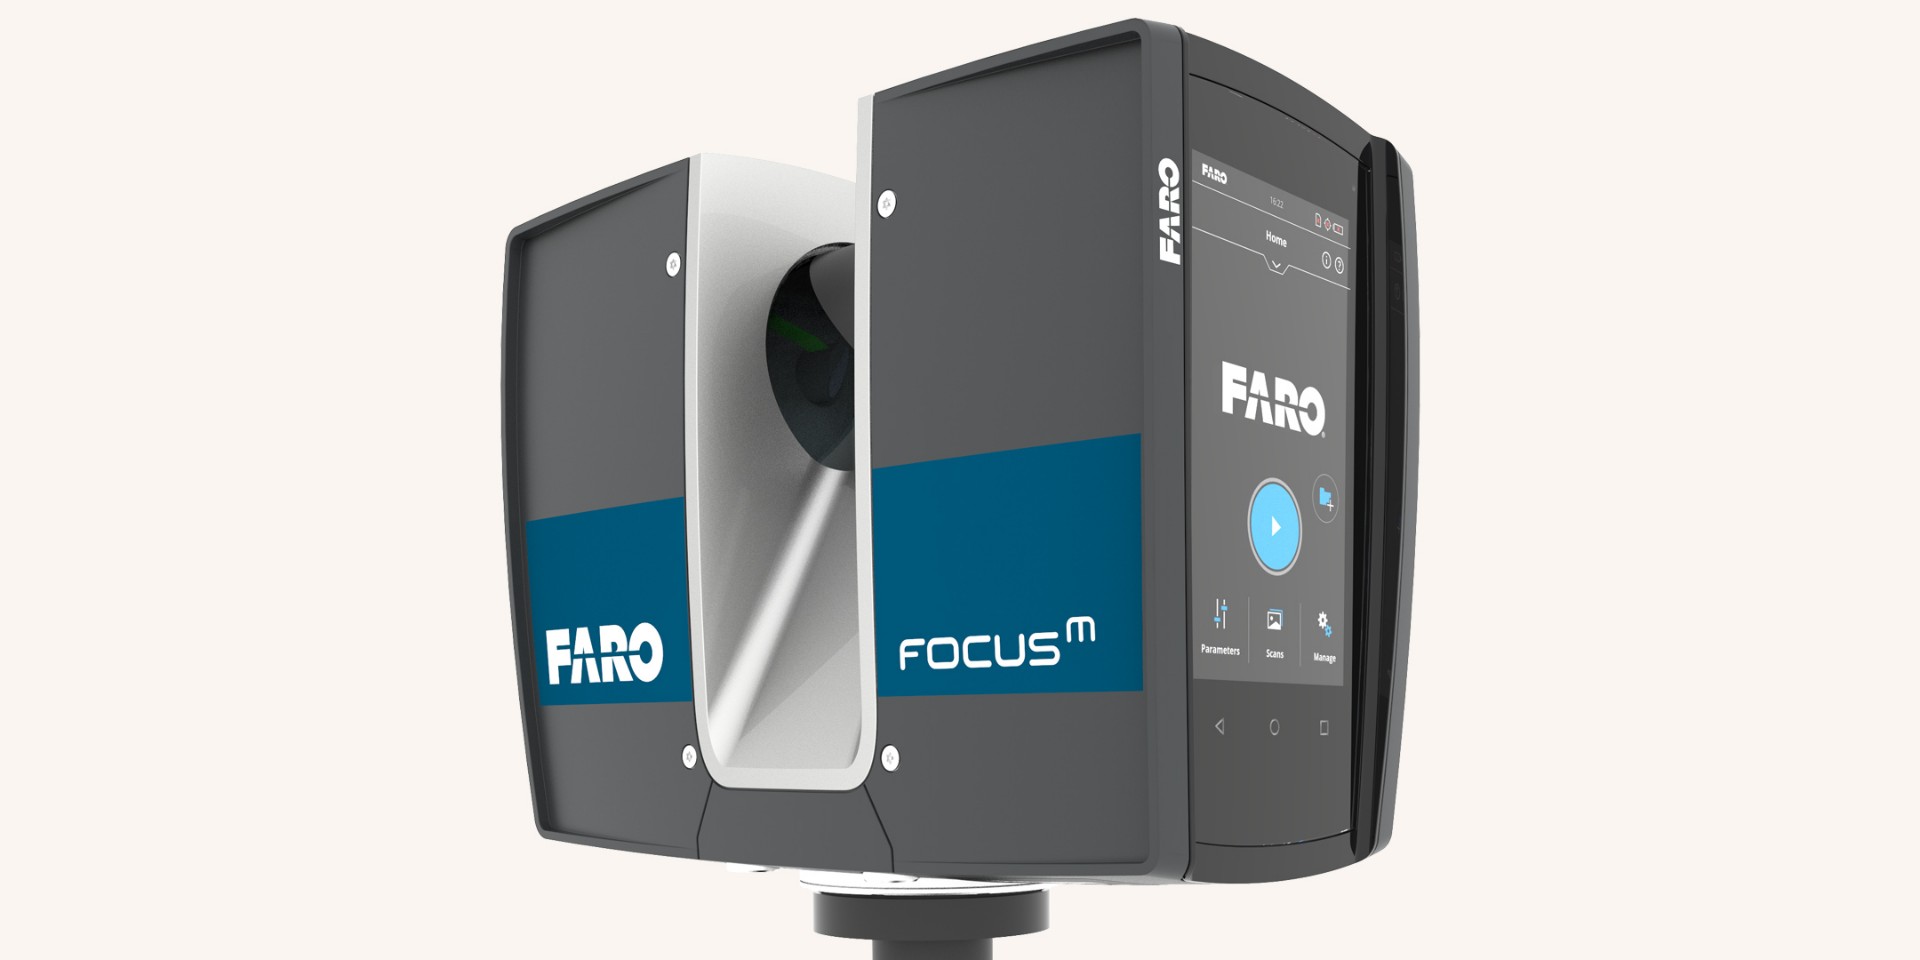 Фото 3D сканер FARO Laser Scanner Focus M70